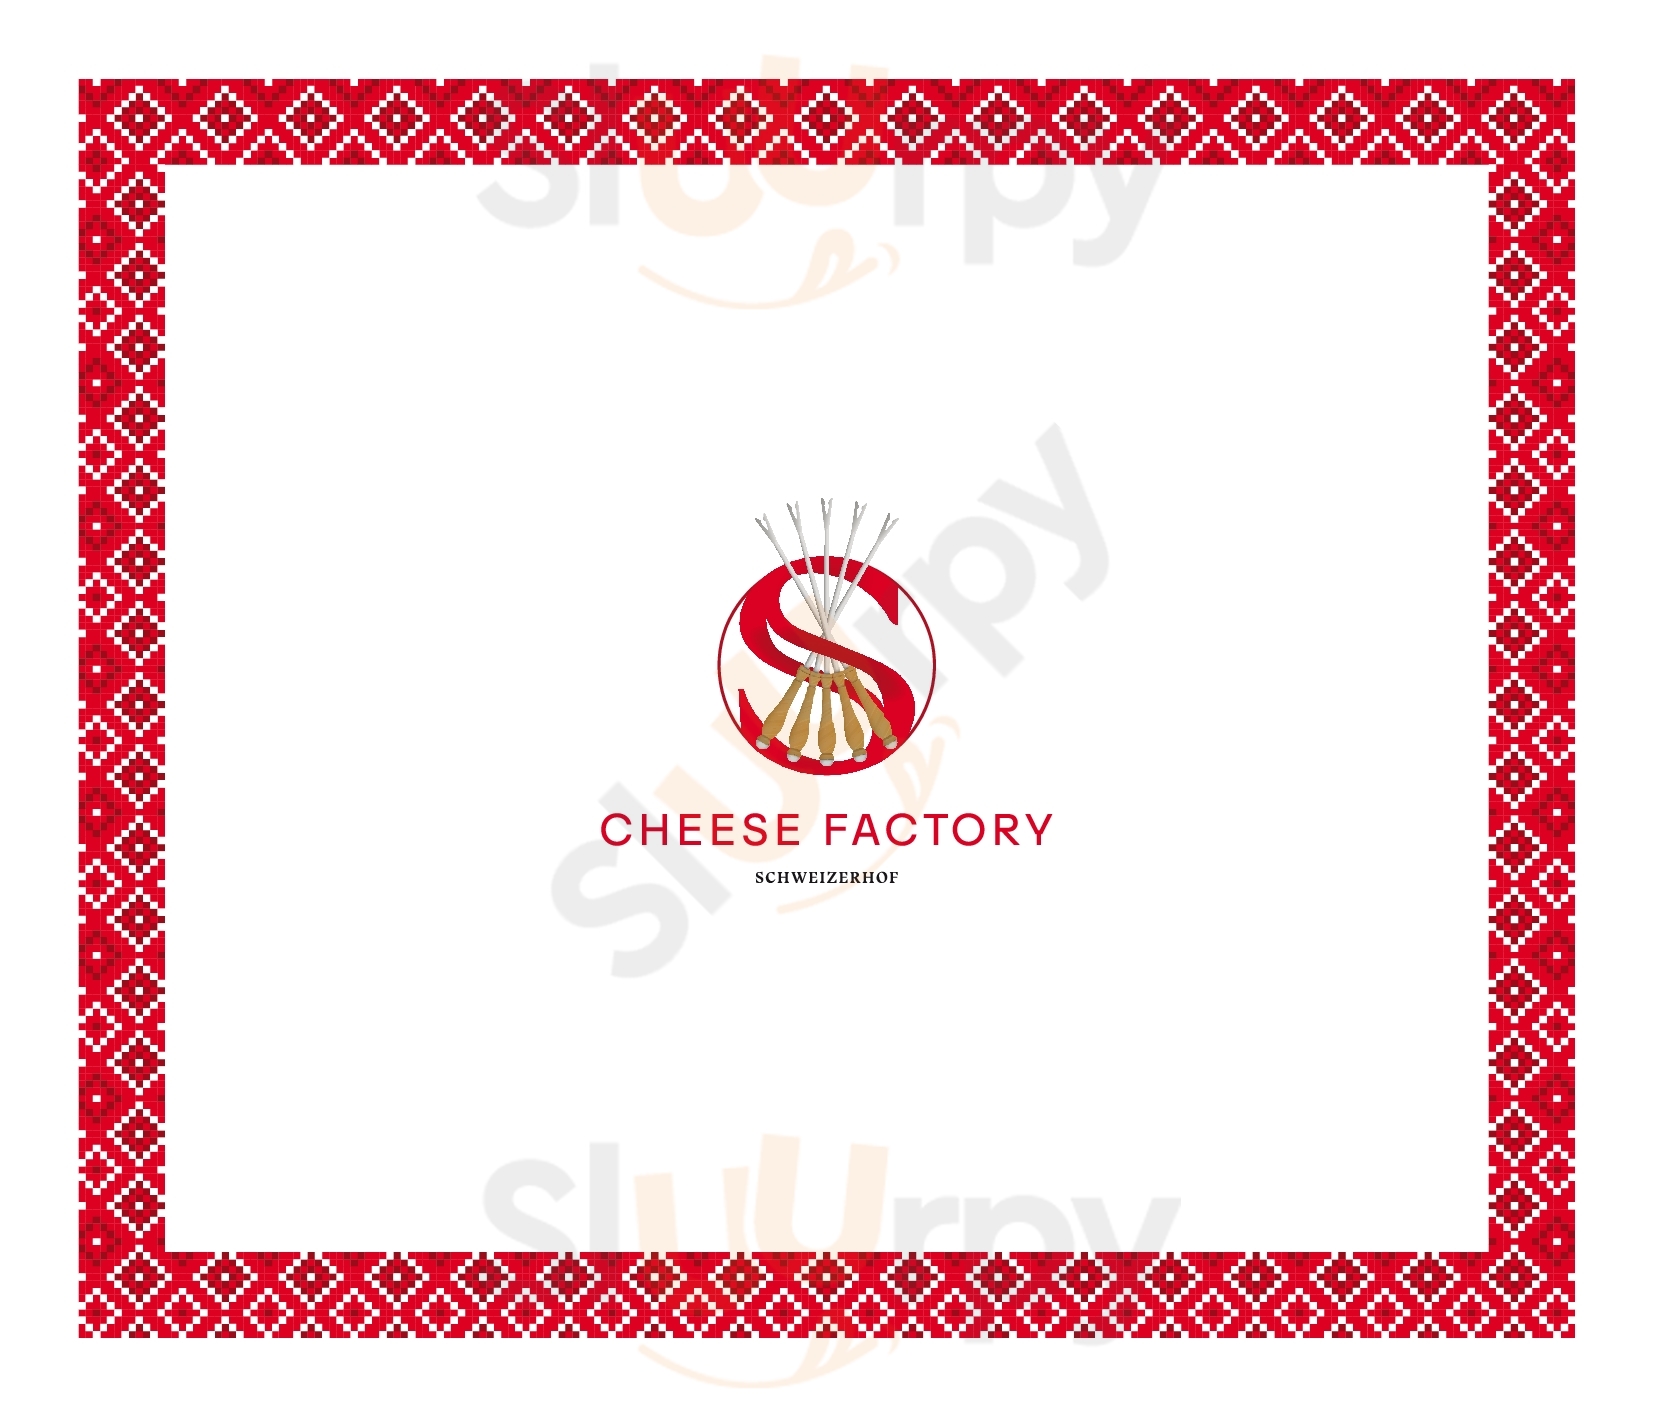 Cheese Factory Zermatt Menu - 1